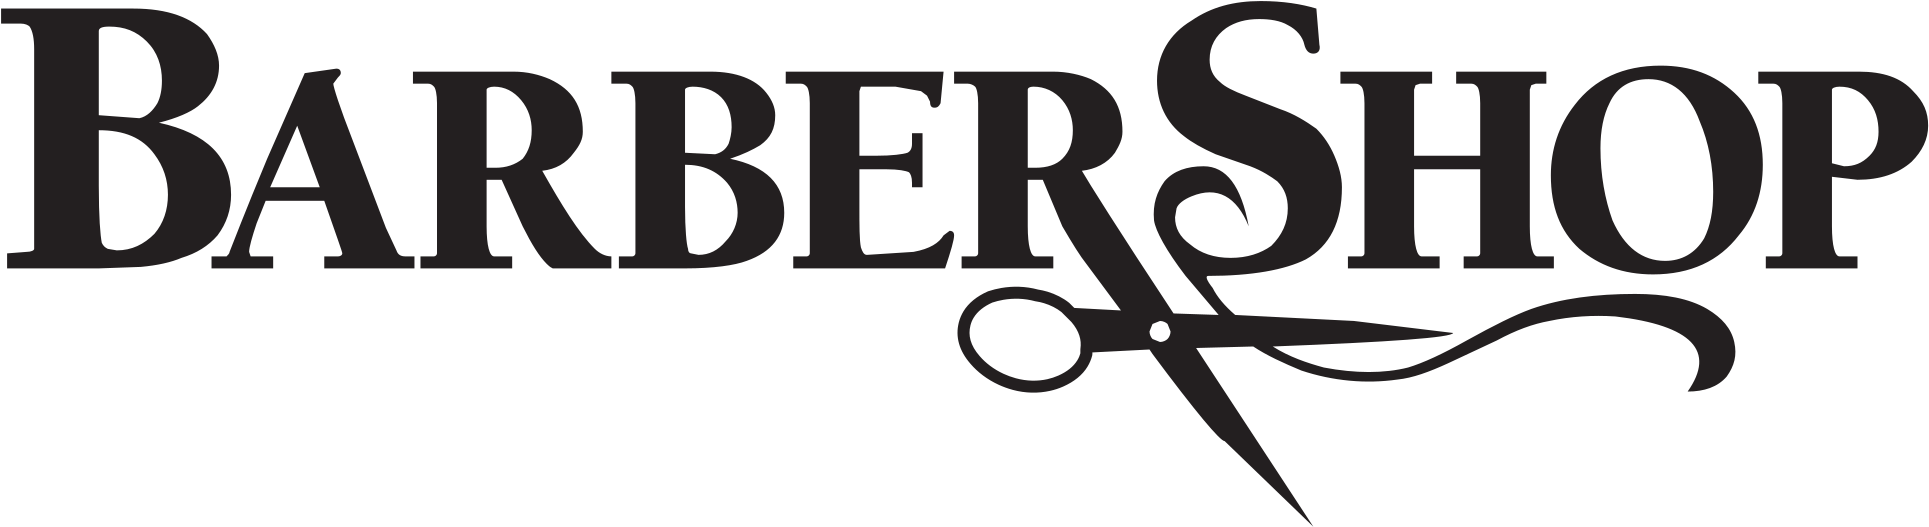 Barbershop Logo, Barber Shop Icon, Simple Icon Stock Vector - Illustration  of barbershop, banner: 121468421